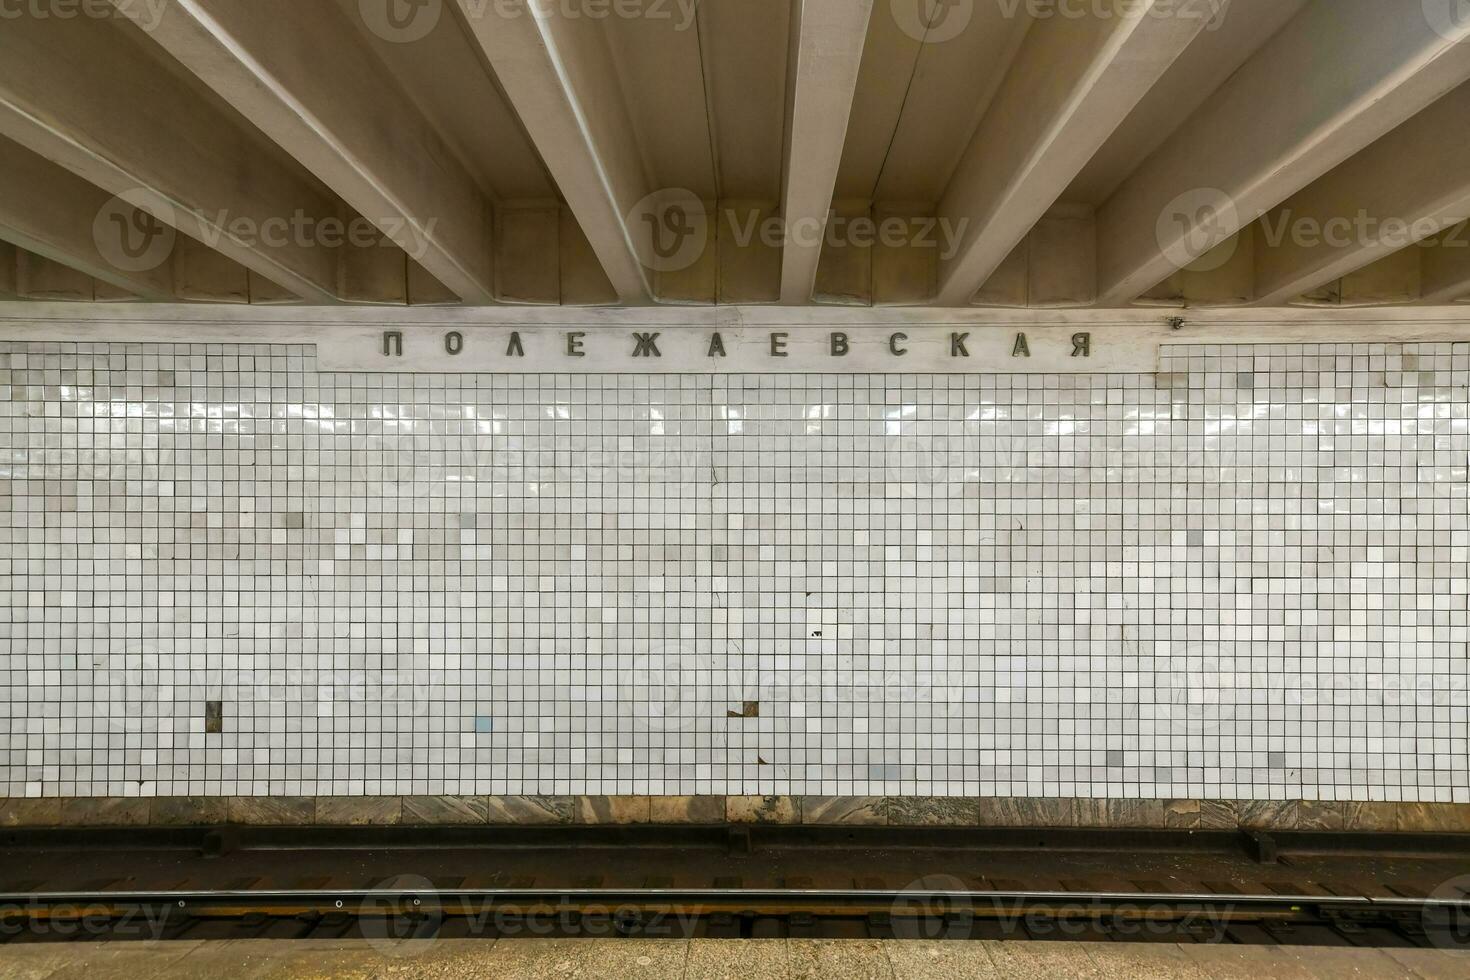 polezjajevskaja metro station - Moskou, Rusland foto